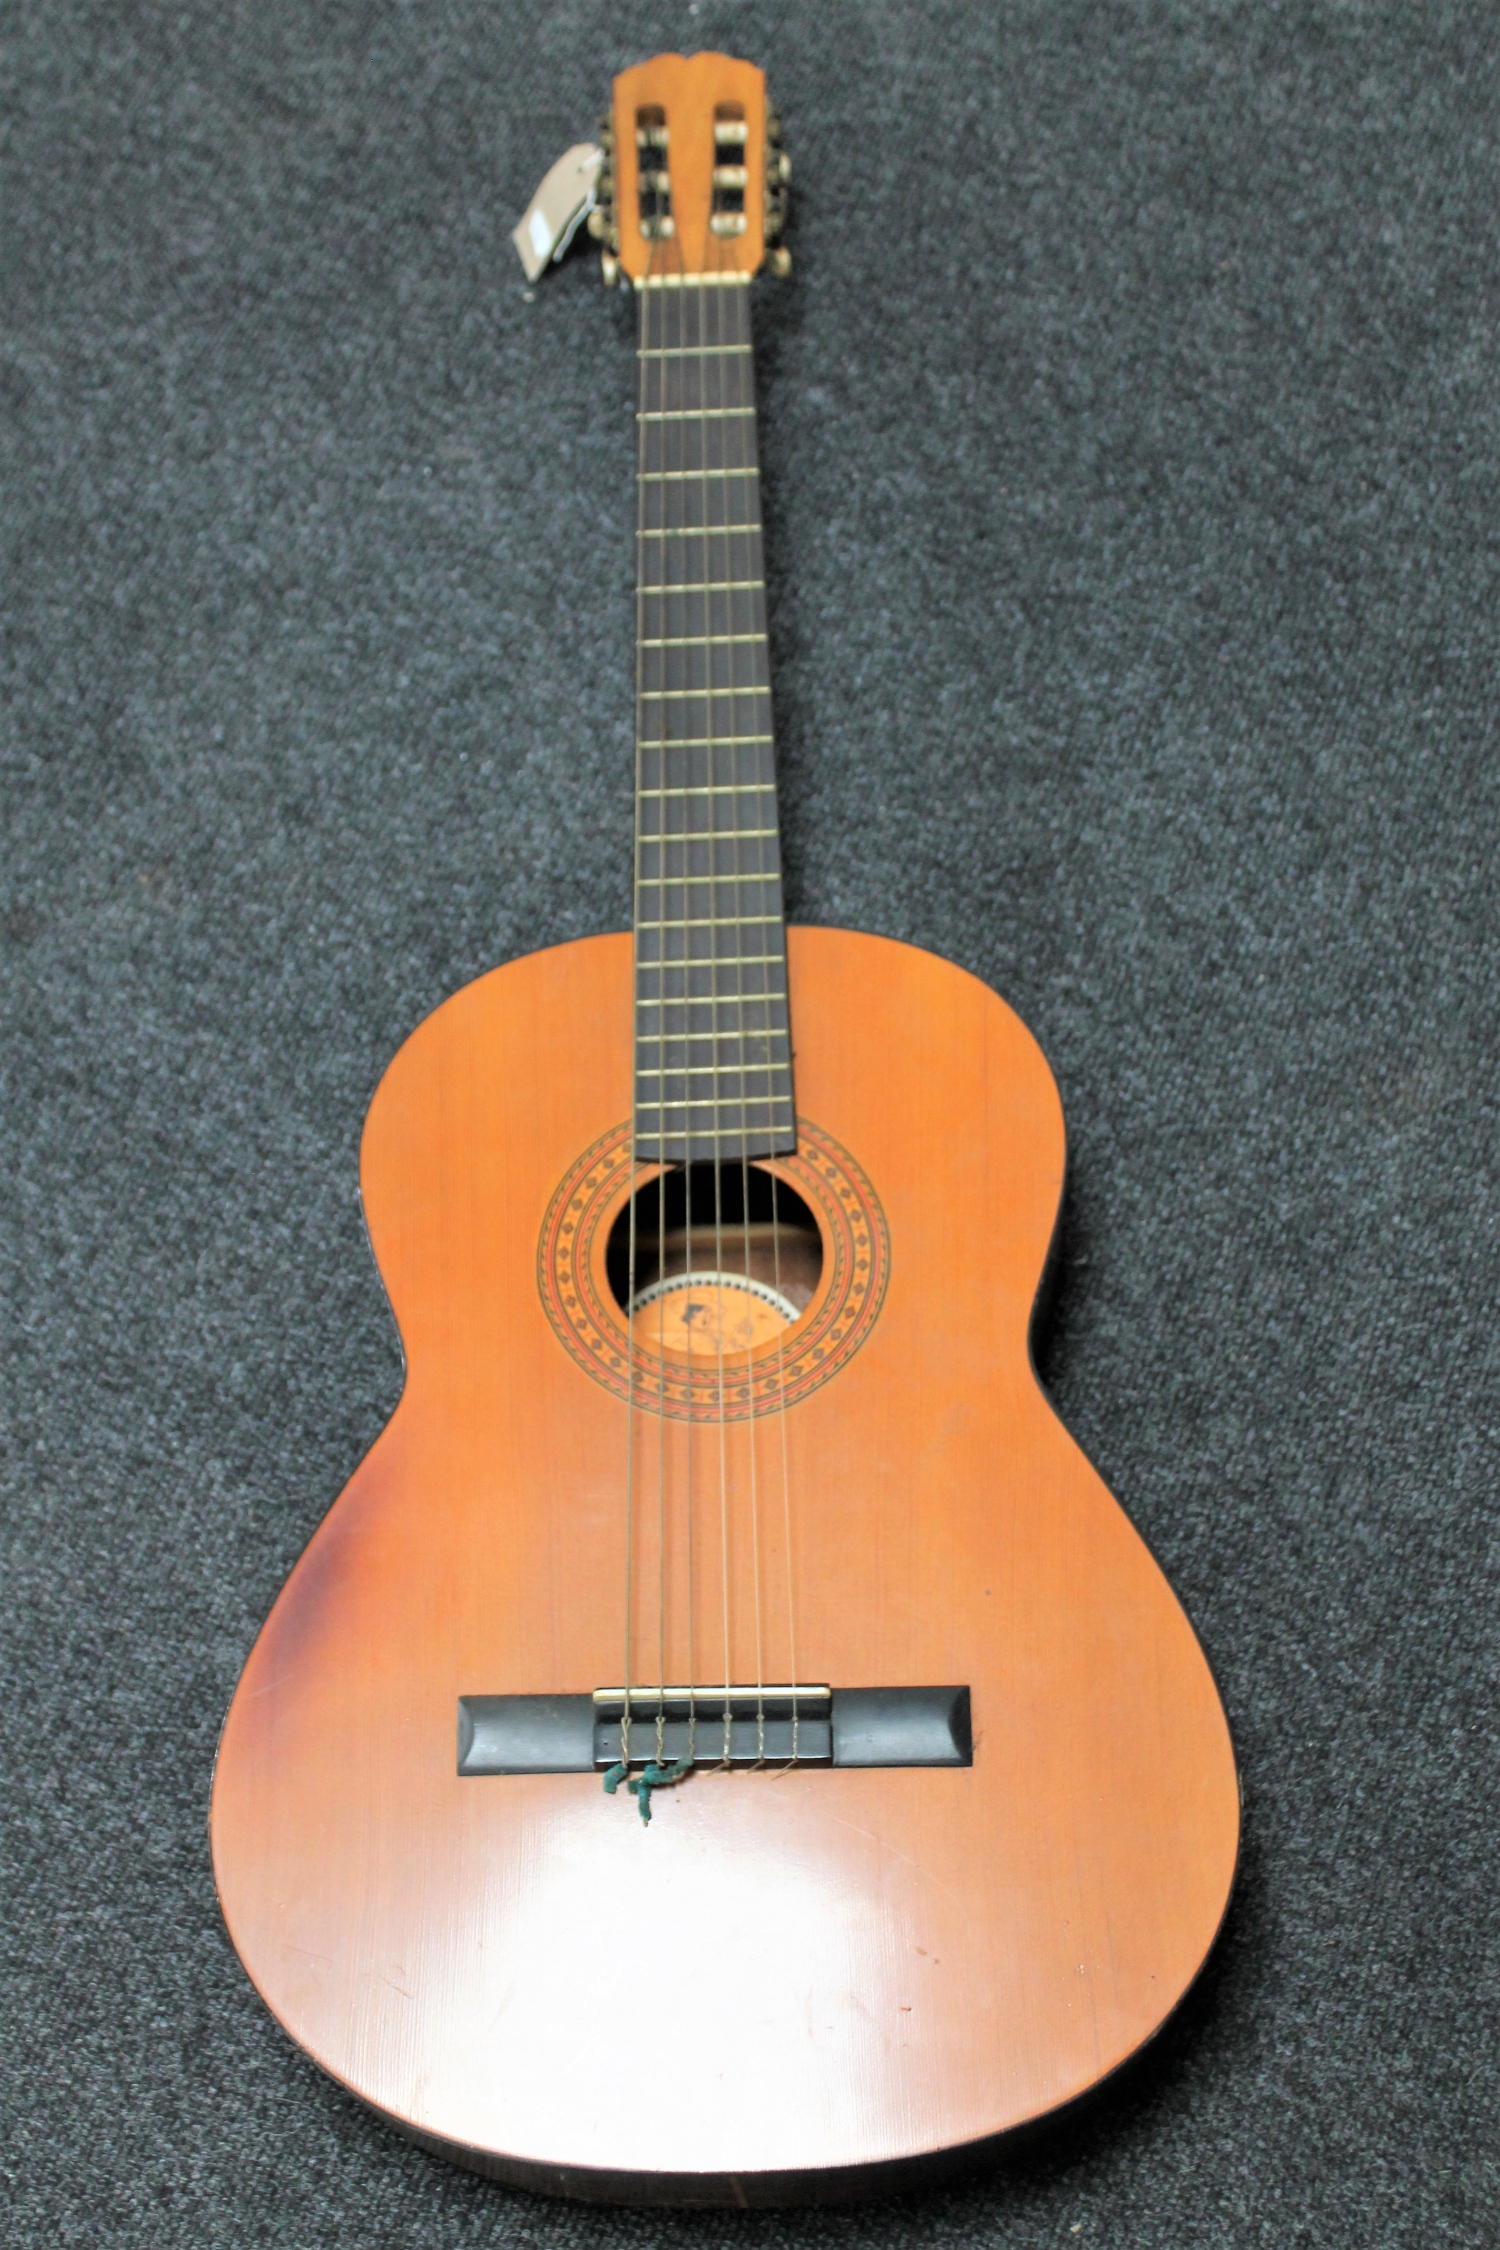 A Spanish Almeria acoustic guitar